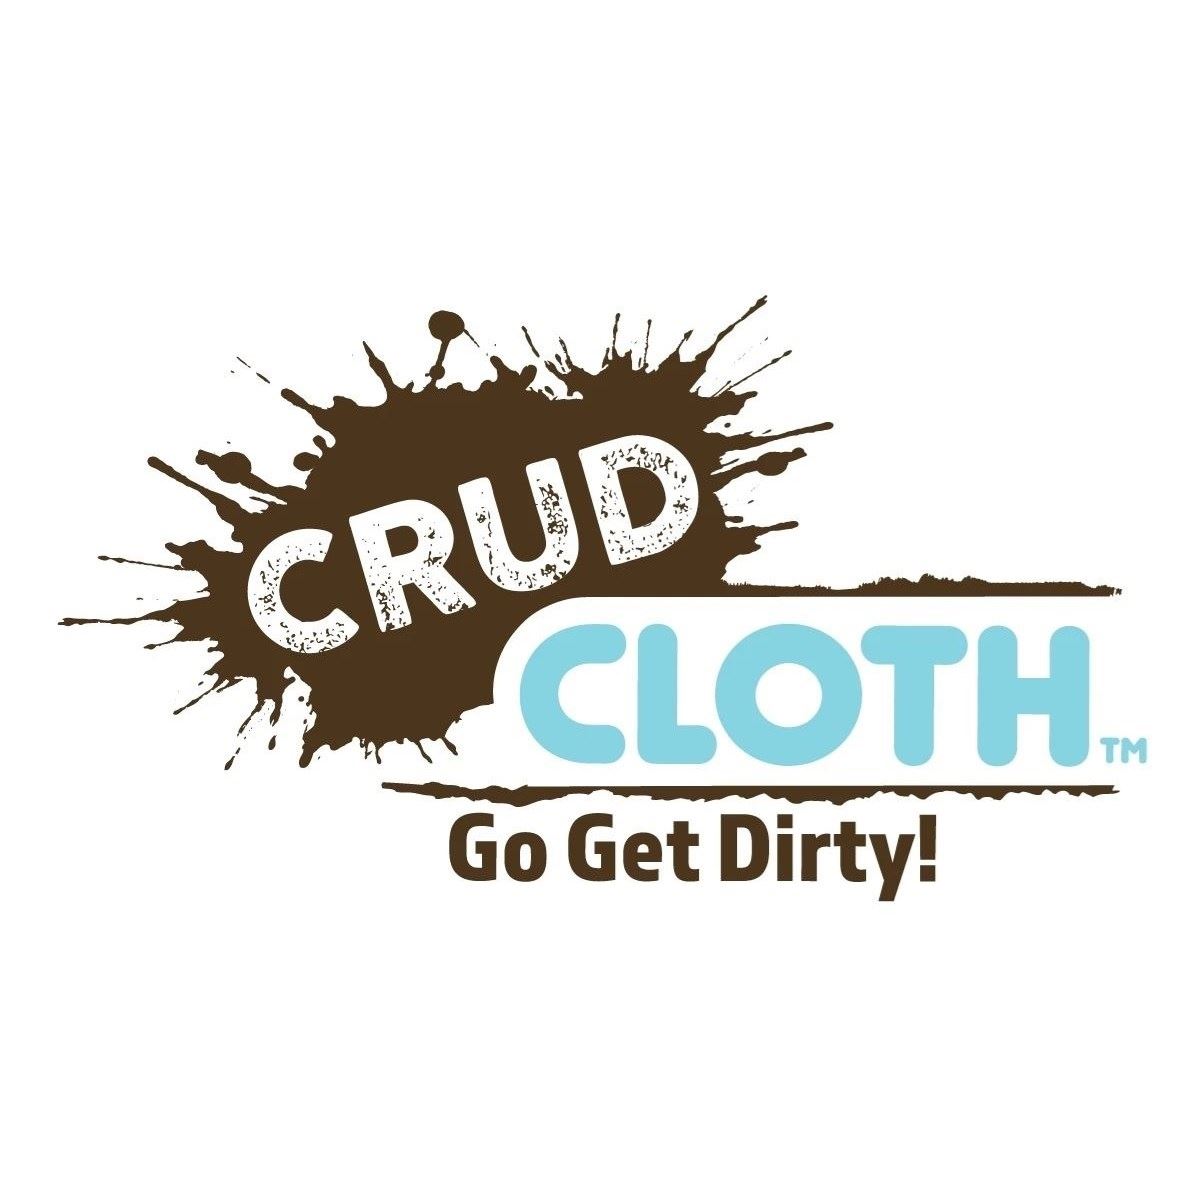 Crud Cloth